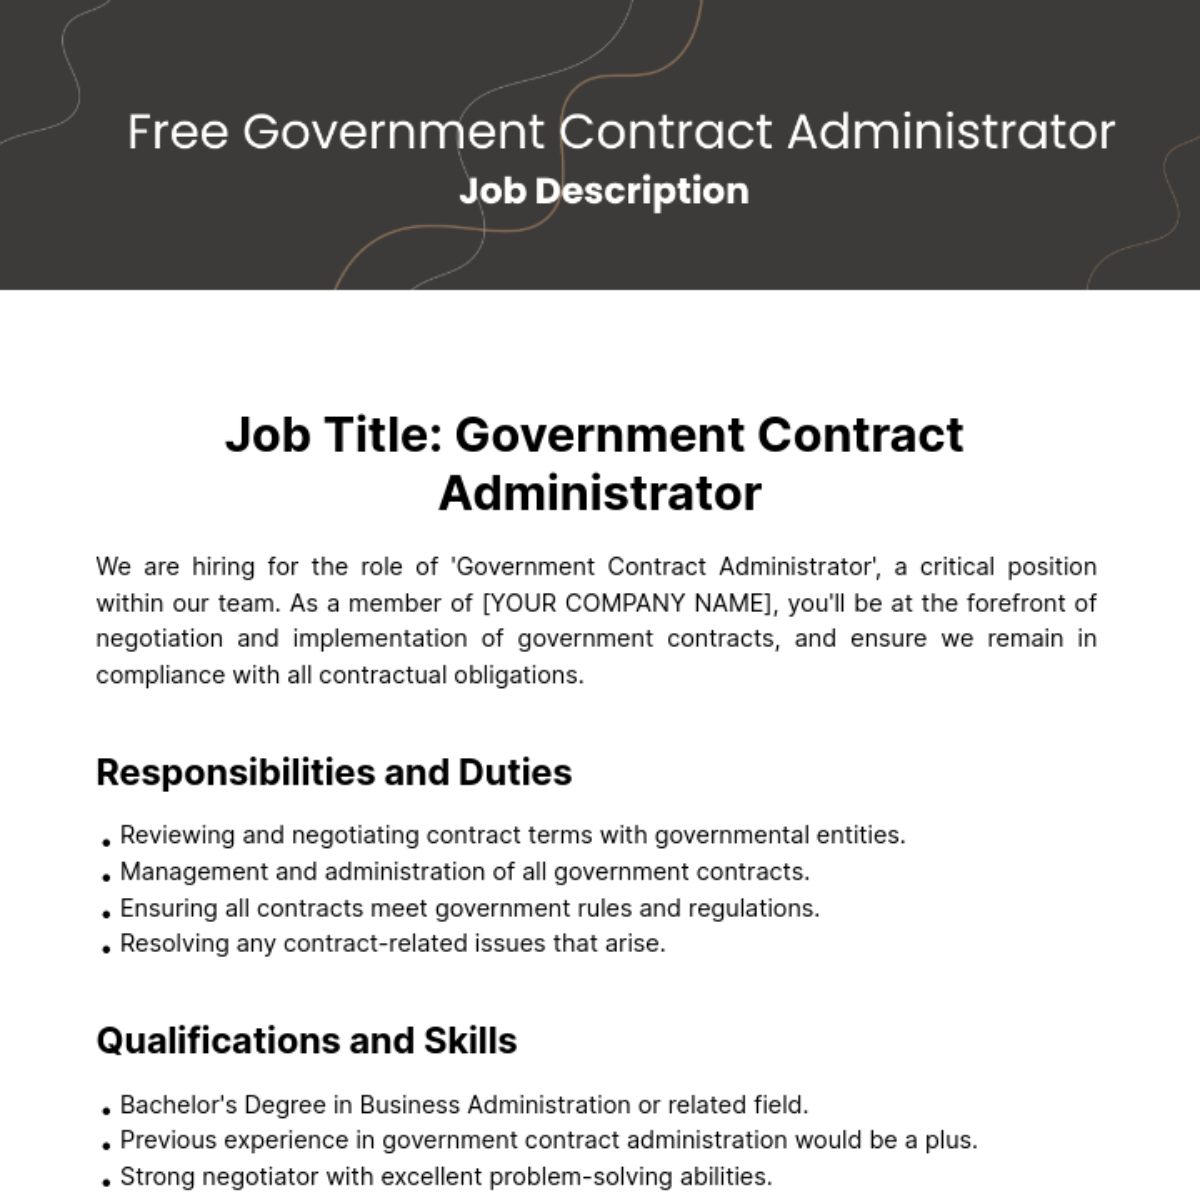 Free Government Contract Administrator Job Description Template